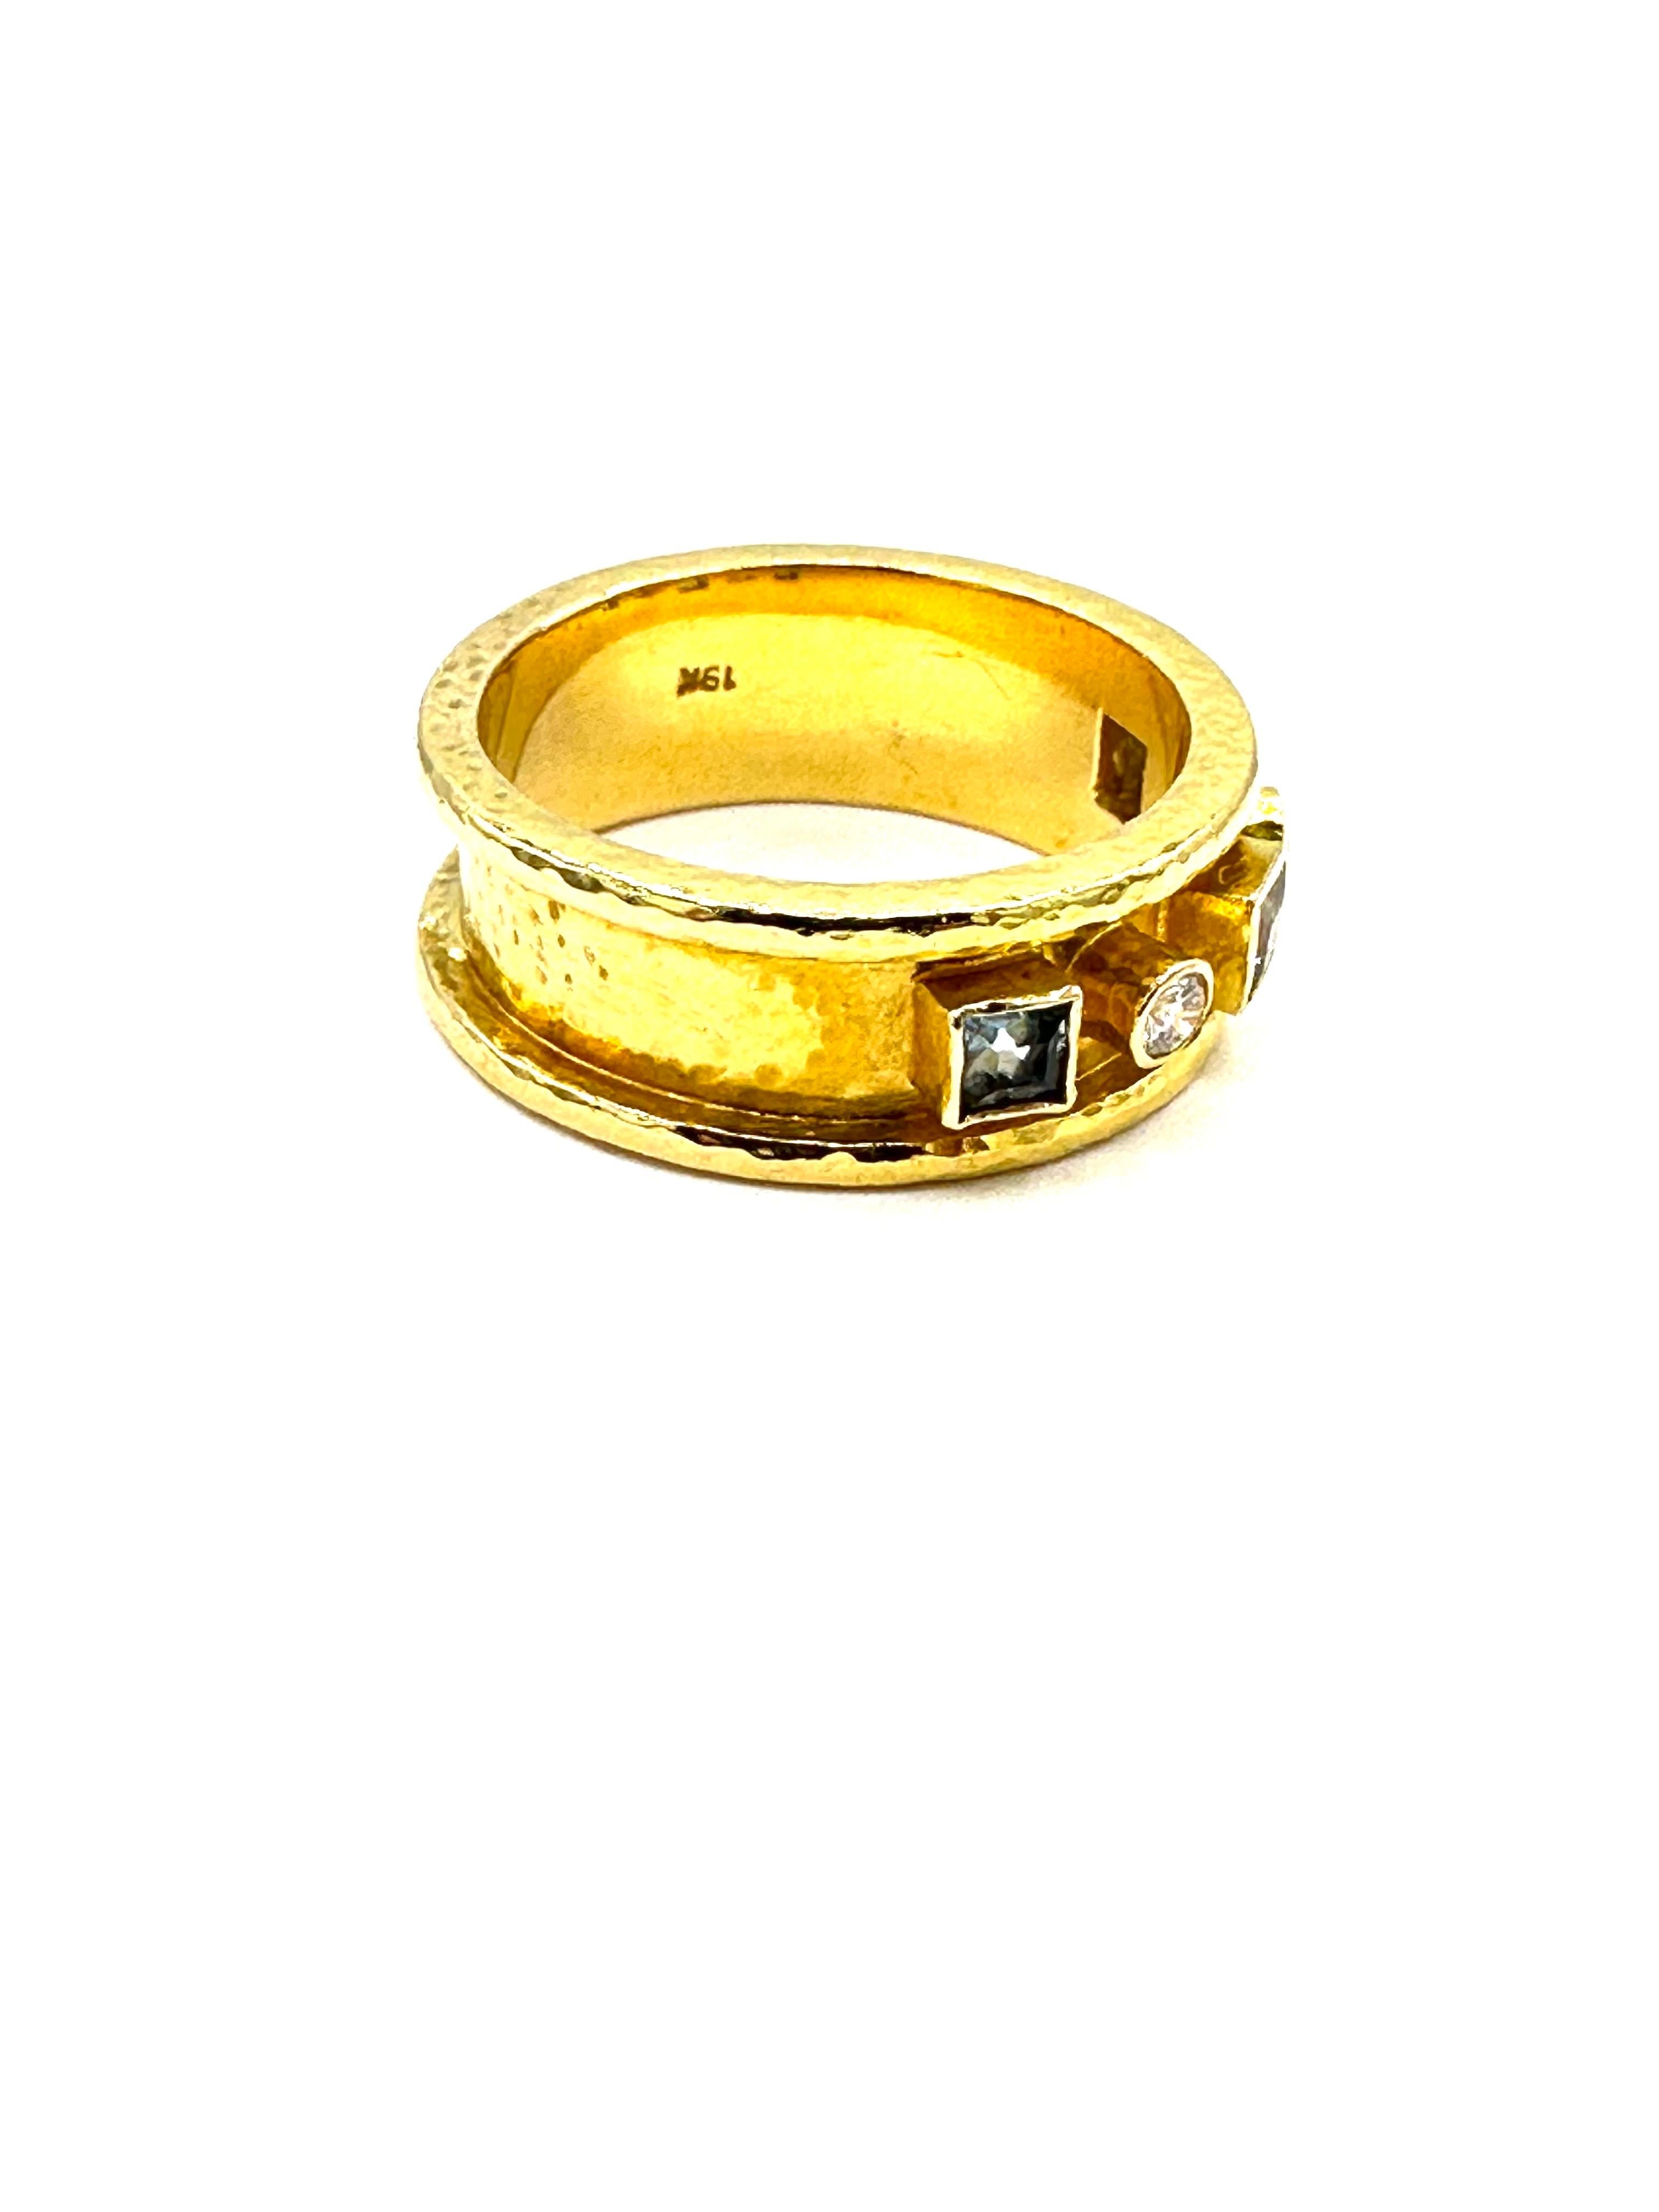 Square Cut Elizabeth Locke Aquamarine and Diamond 19K Textured Yellow Gold Band Ring For Sale